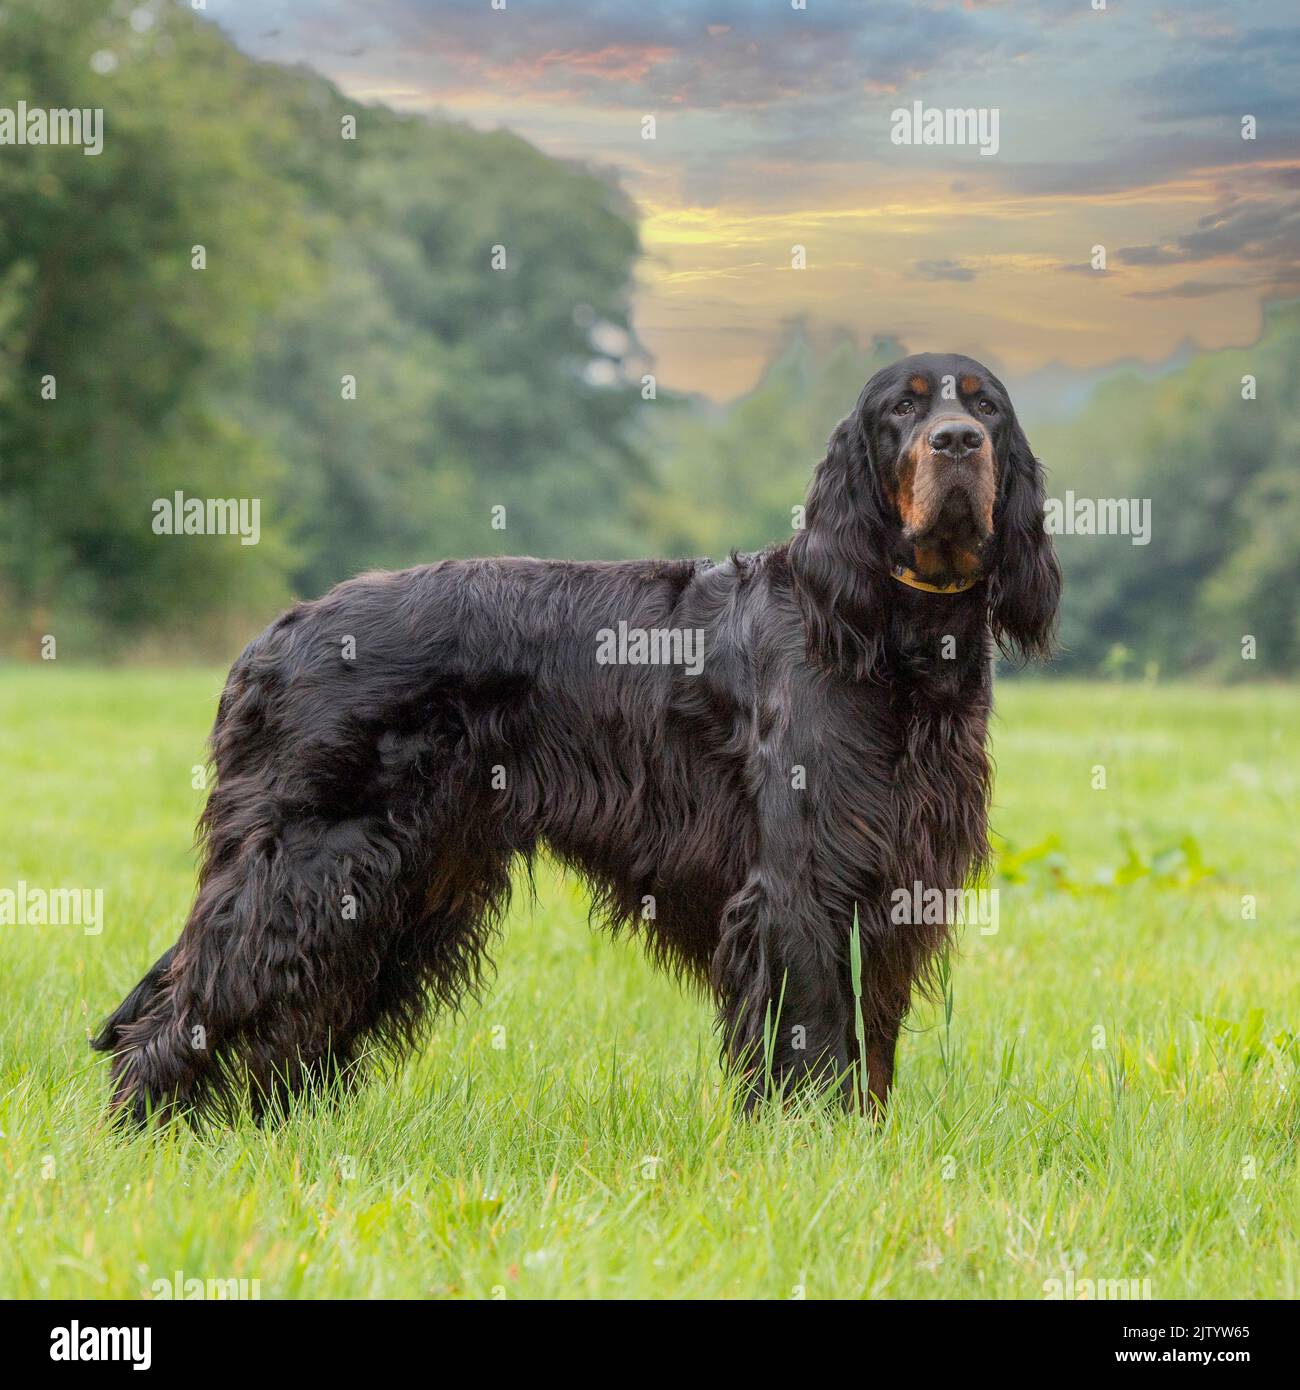 Gordon Setter dog Stock Photo